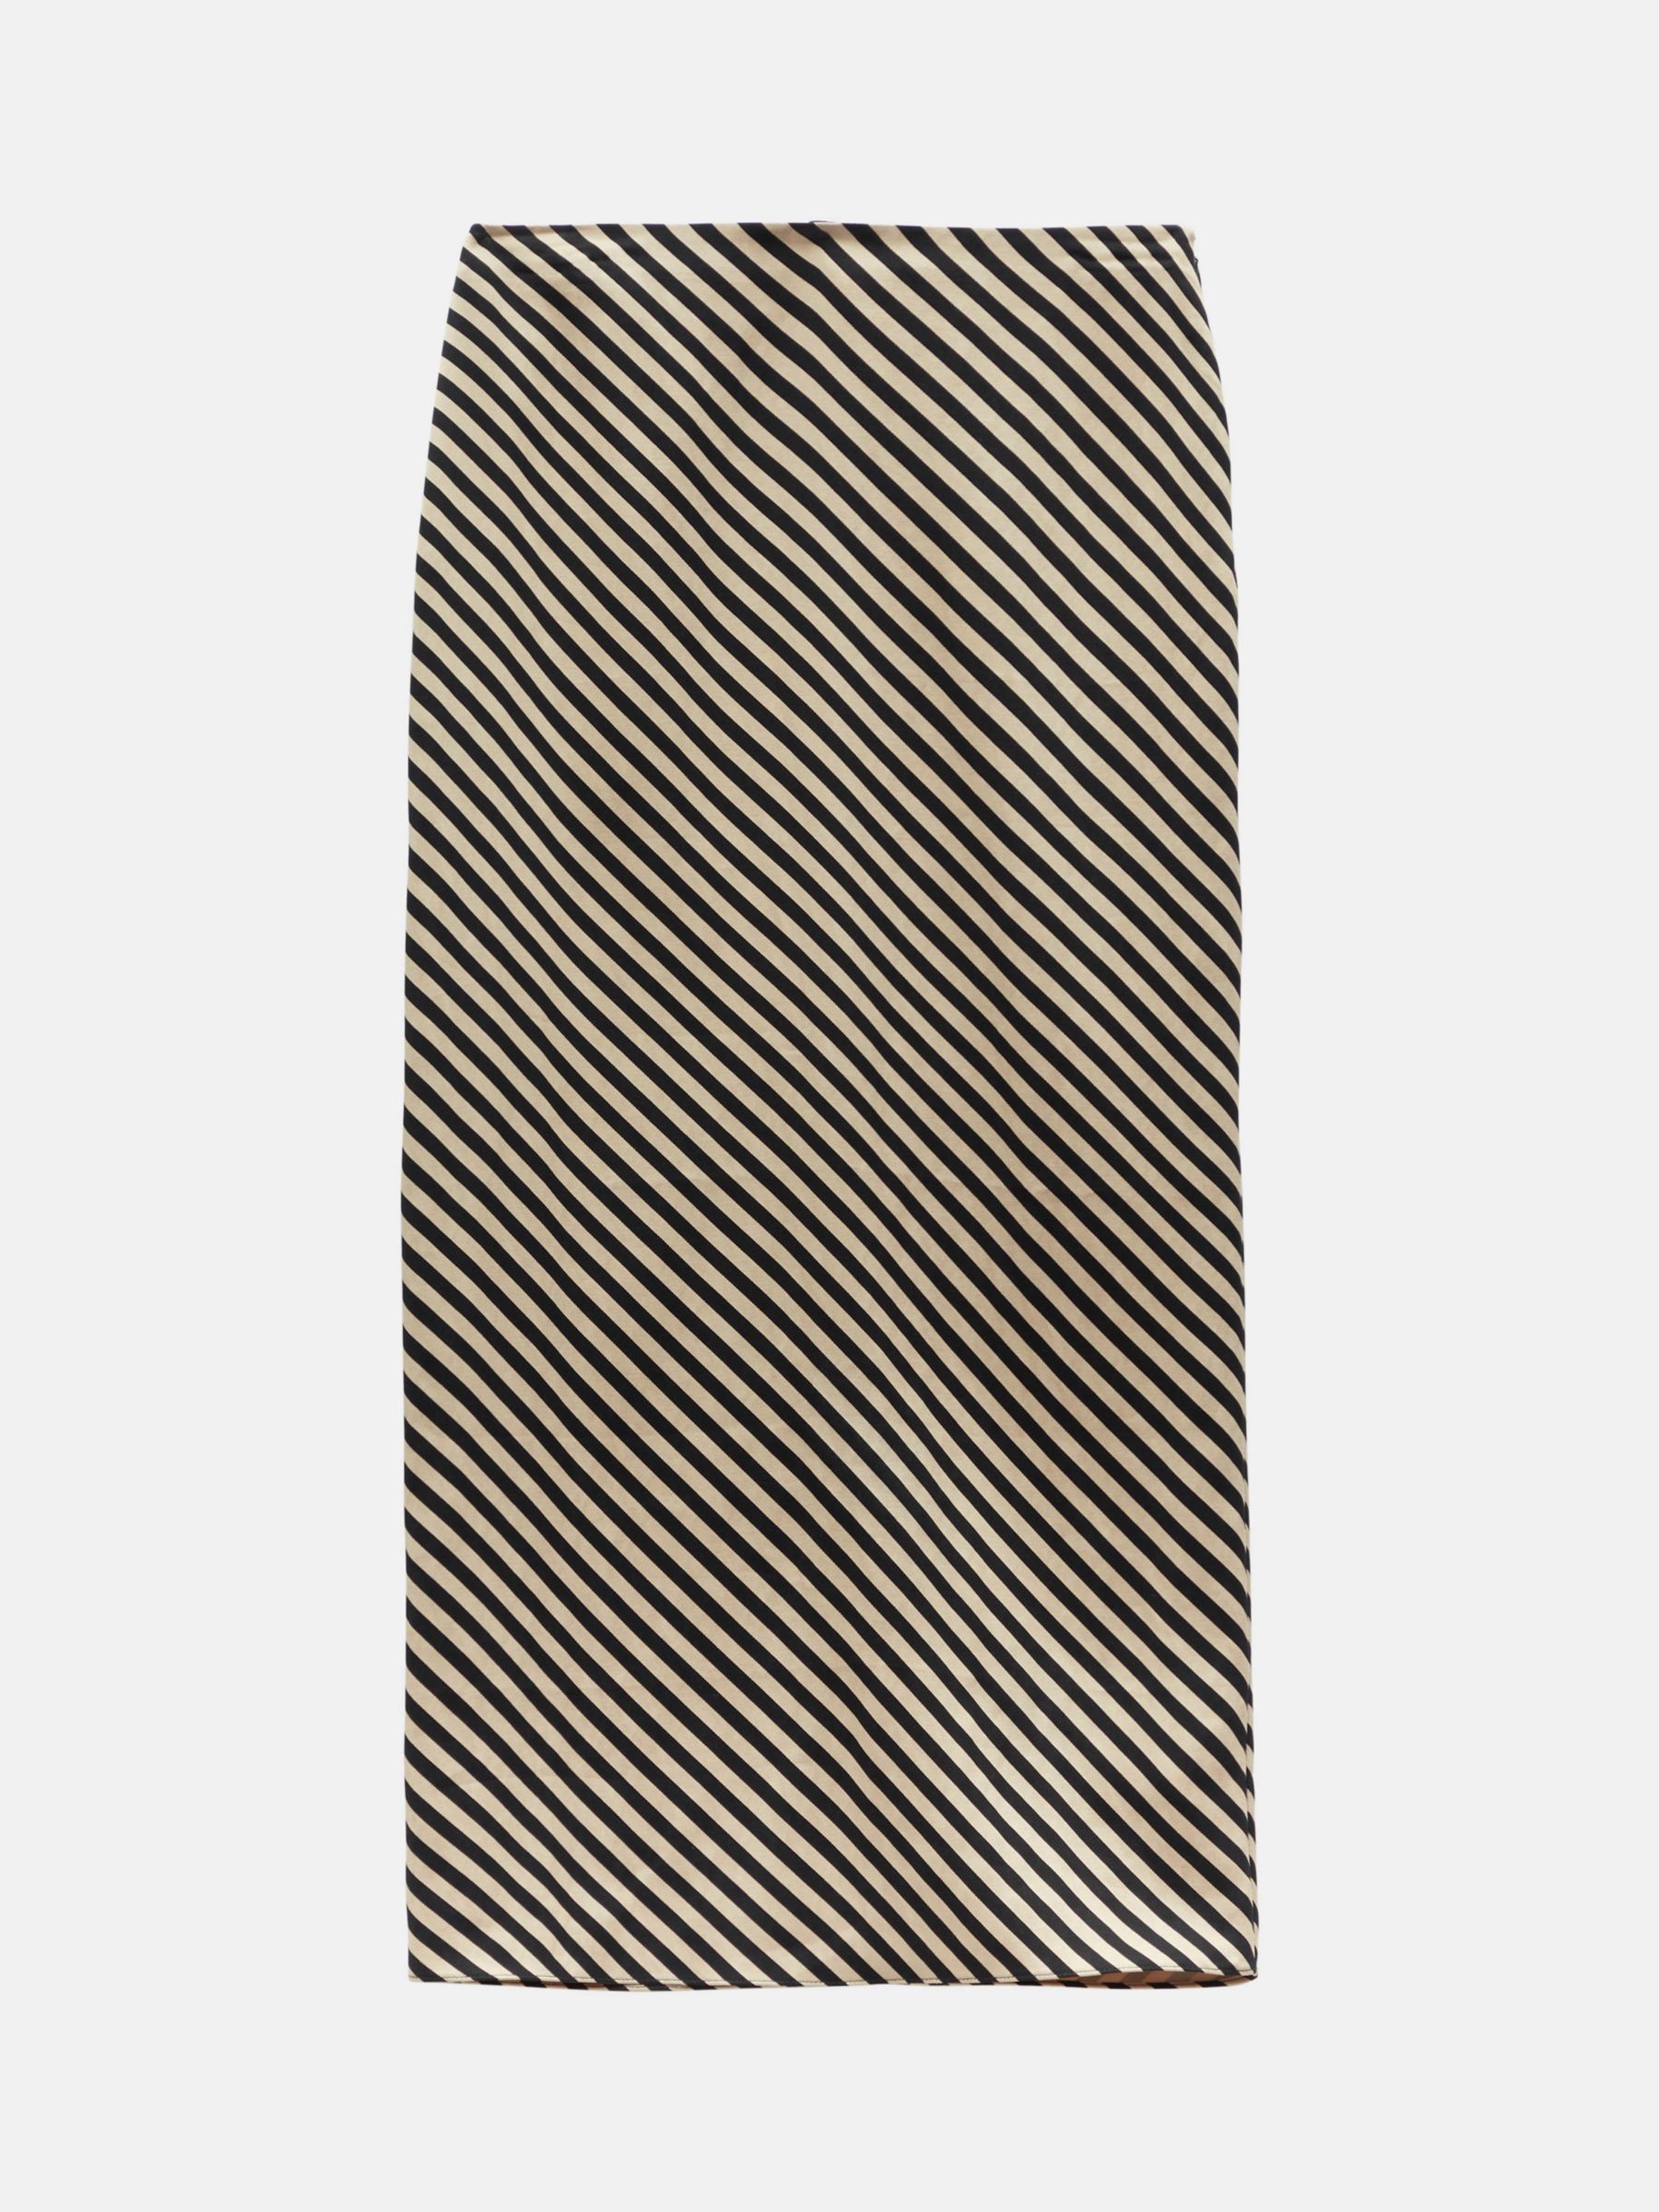 Reema Diagonal Stripe Split Maxi Skirt, Black/Cream, 10